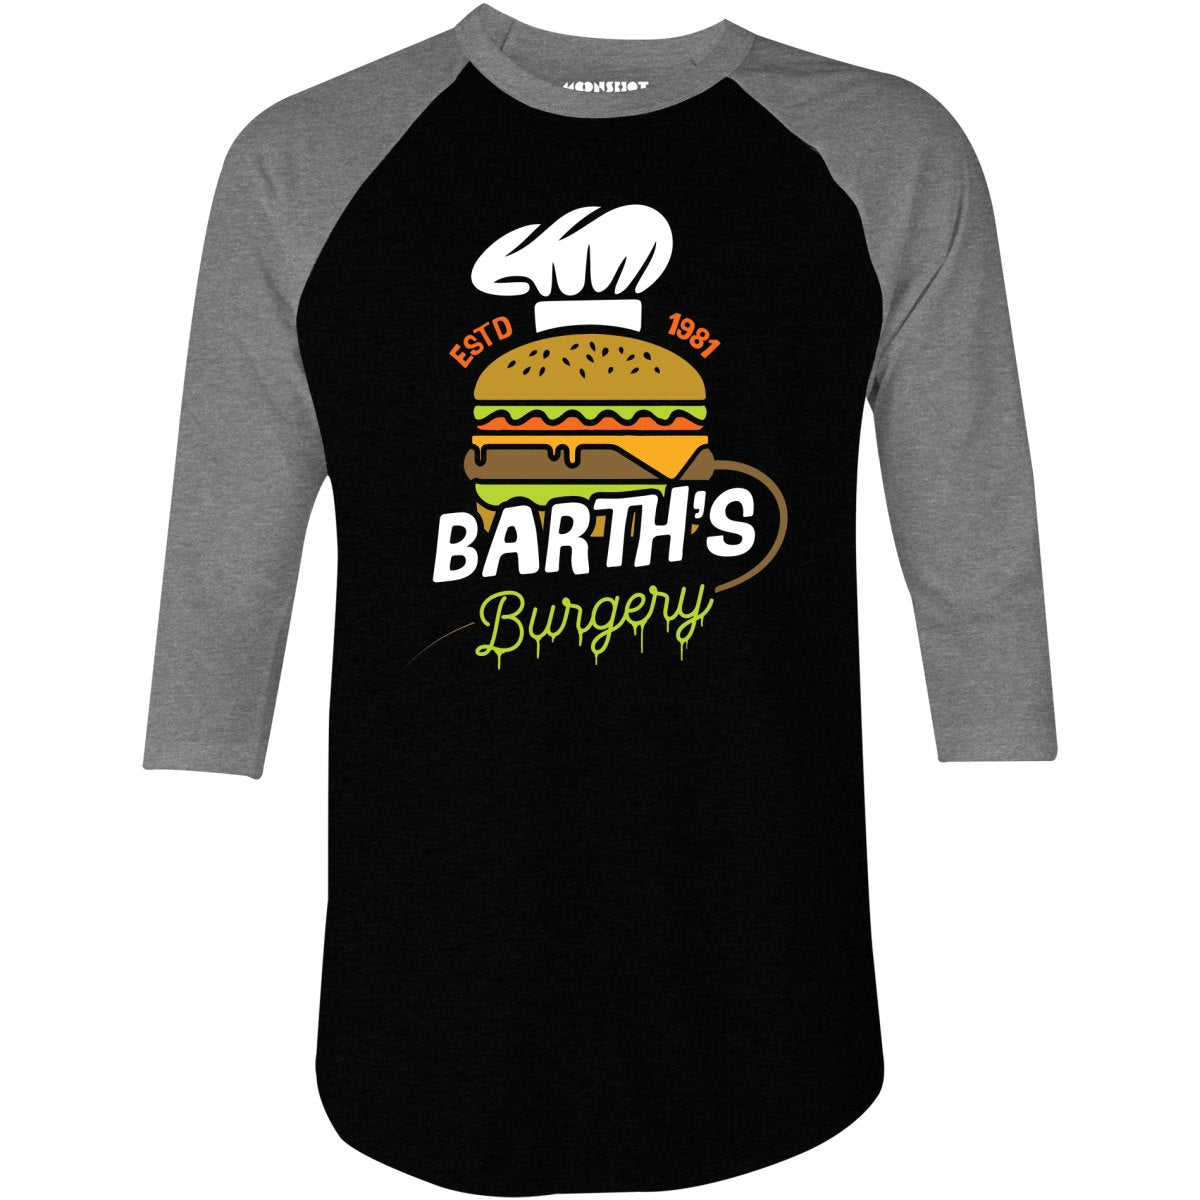 Barth's Burgery - 3/4 Sleeve Raglan T-Shirt